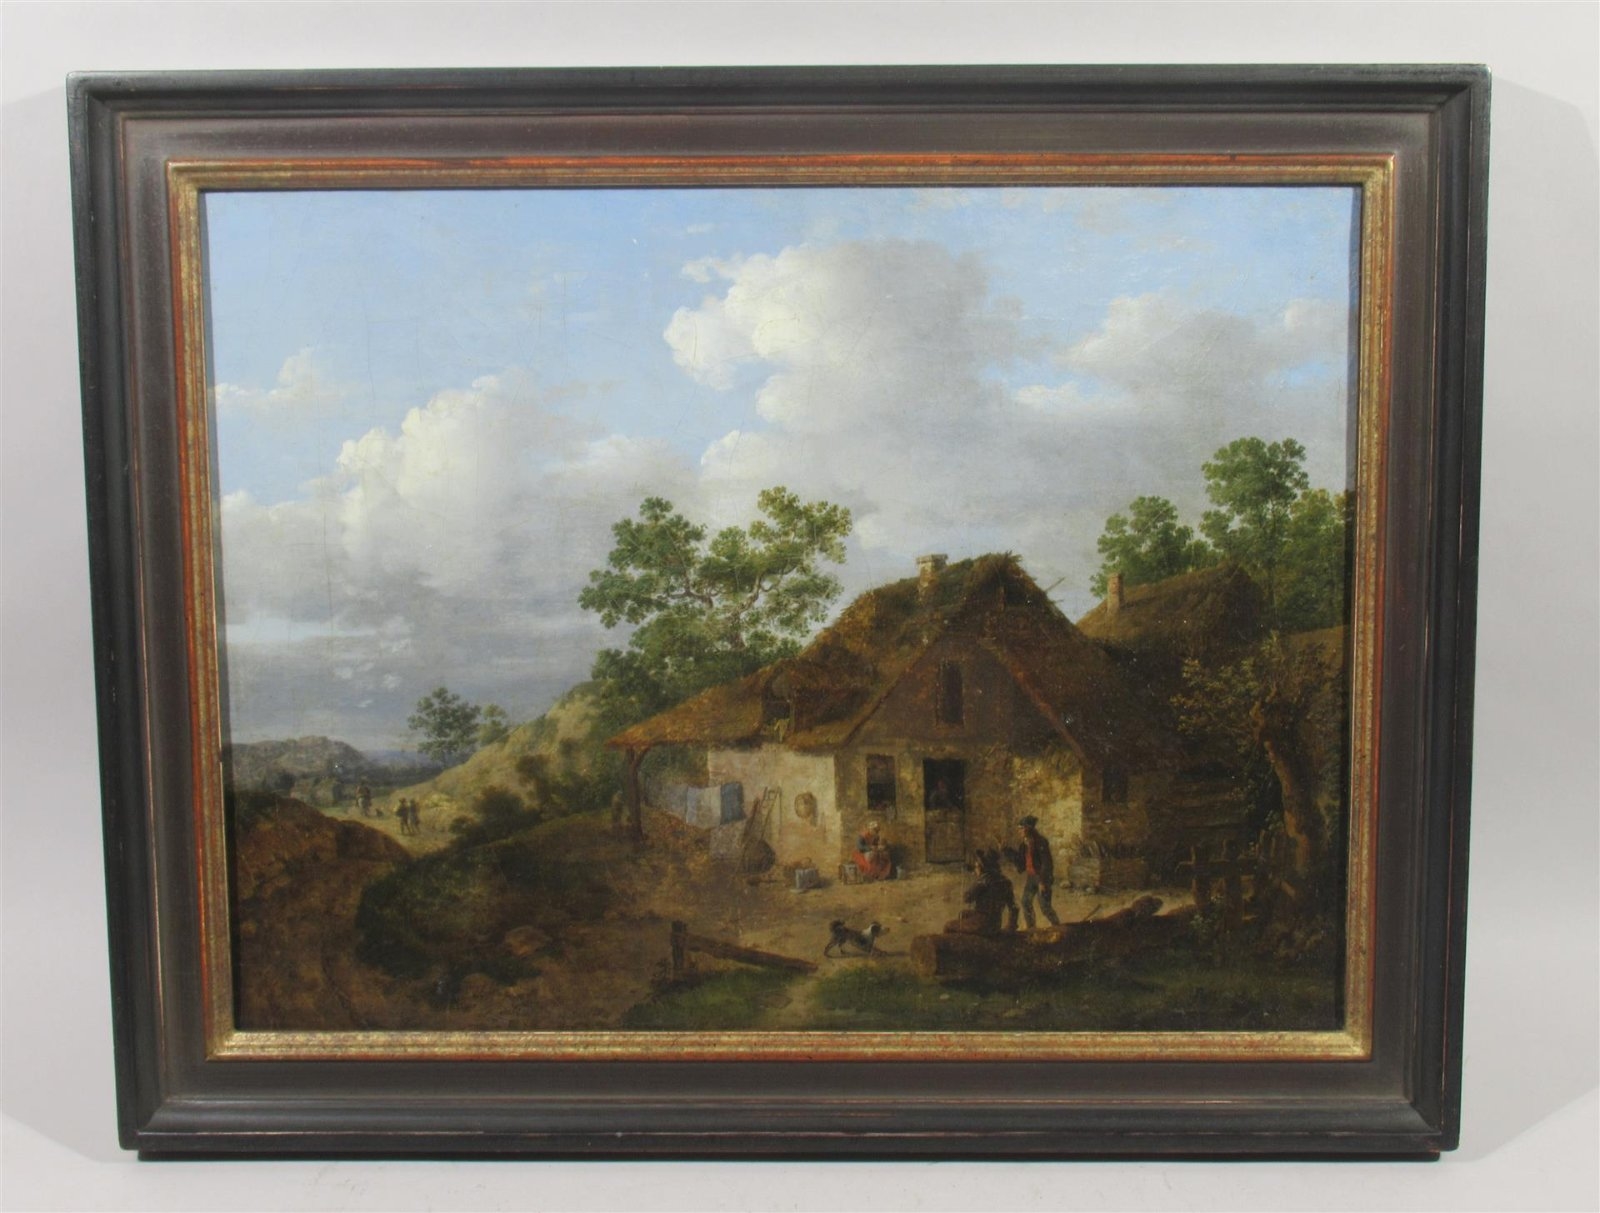 La chaumière by Martin Drolling, 1813